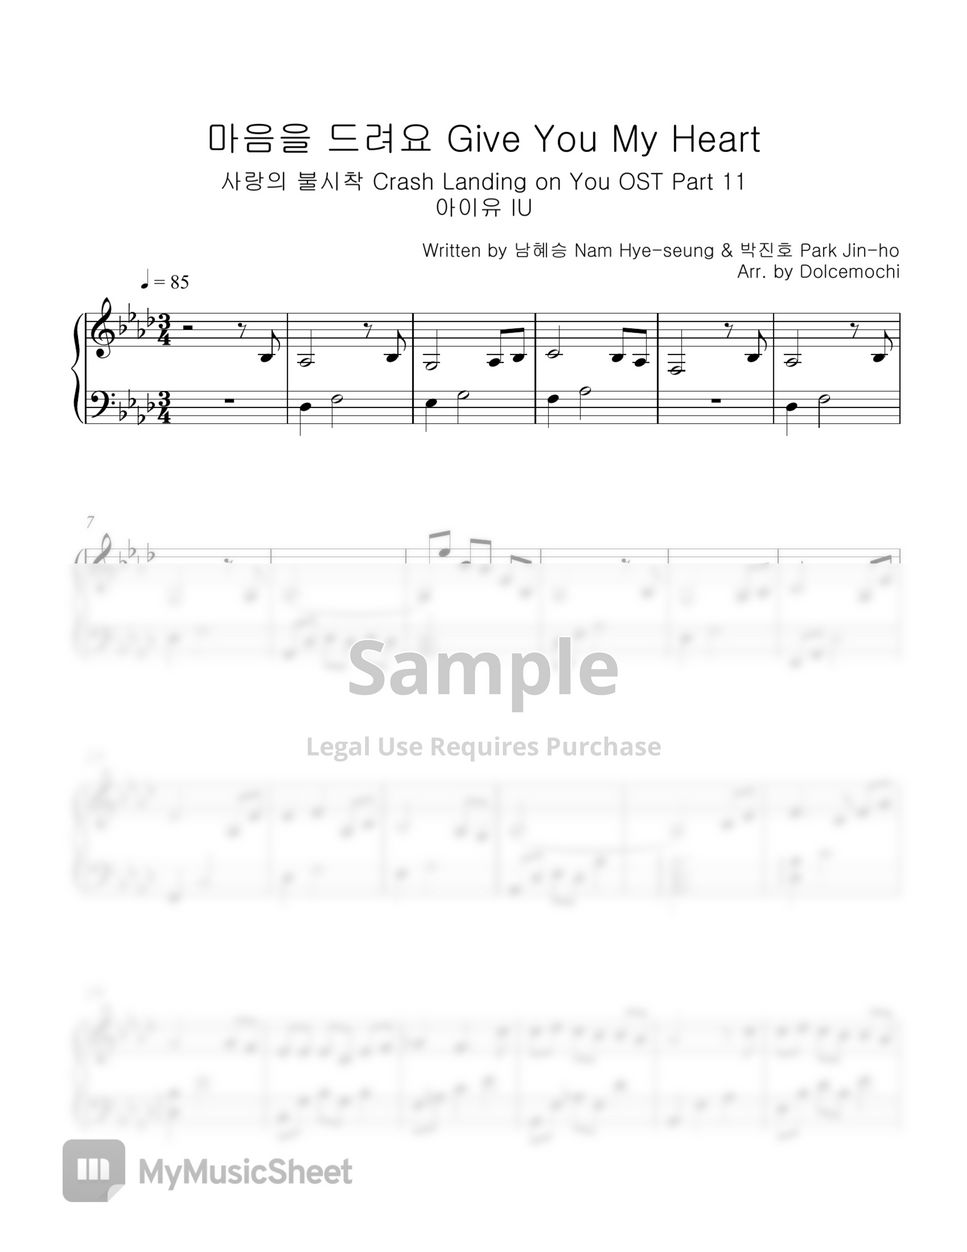 [Crash Landing on You 사랑의 불시착] OST Part 11 - IU (아이유) - I Give You My Heart 마음을 드려요 by Dolcemochi